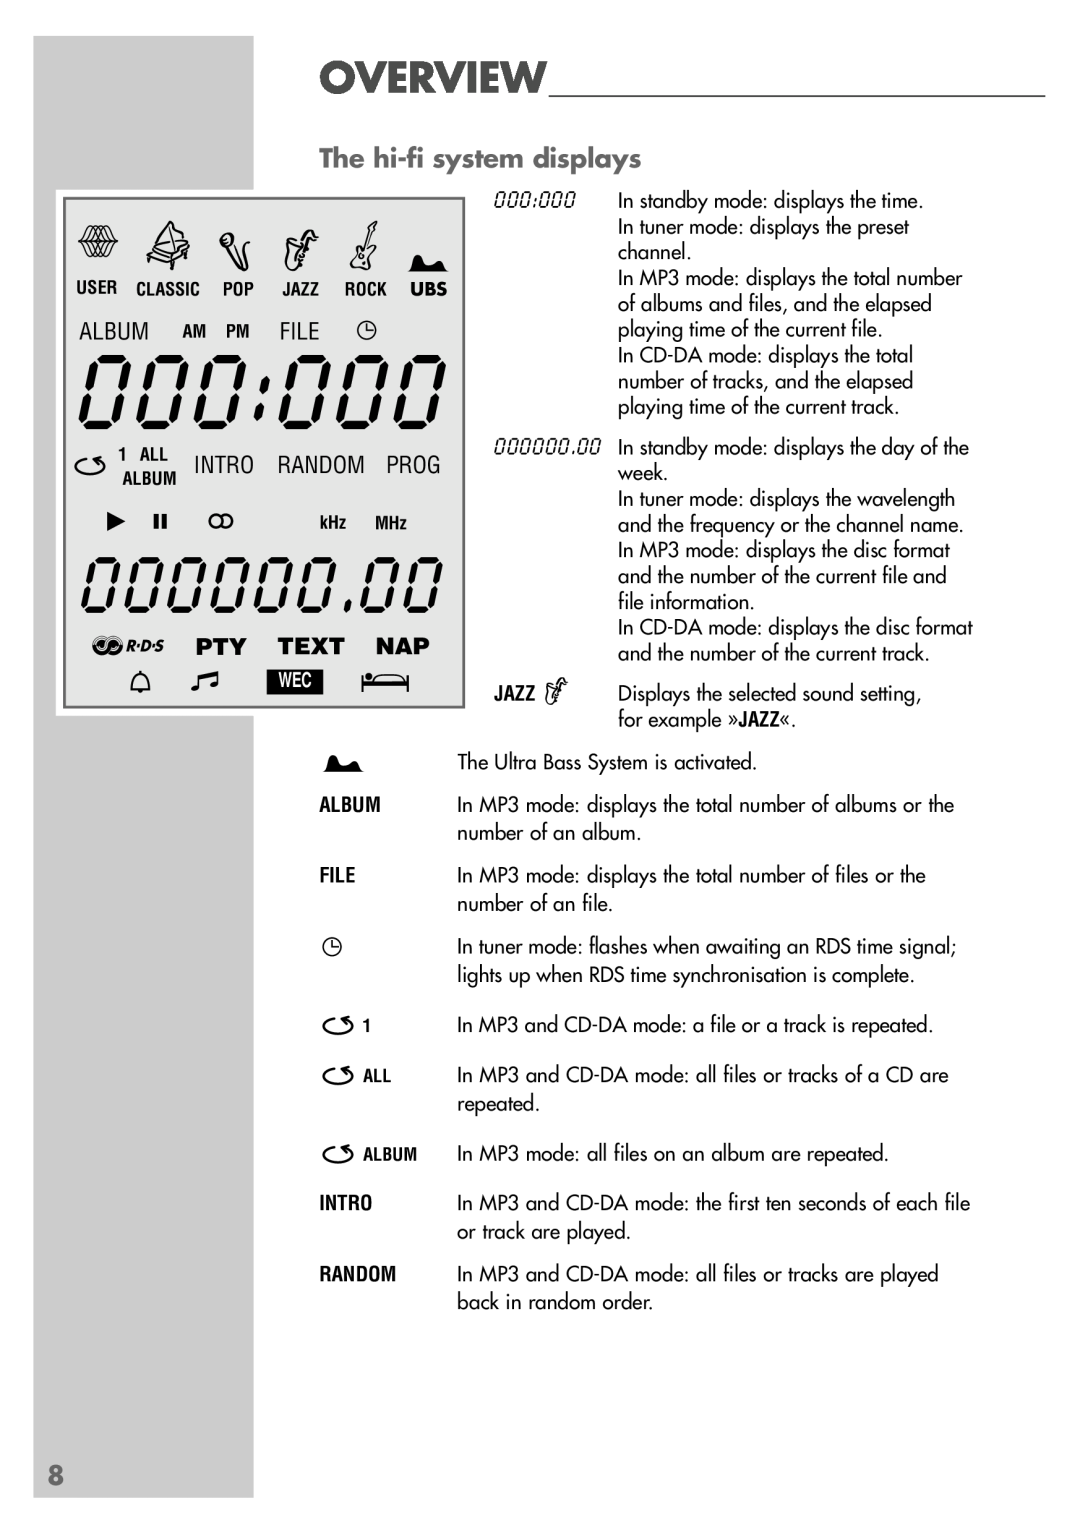 Grundig cirflexx UMS 5400 DEC 000:000, 000000.00, Xc V Y B, The hi-fisystem displays, Album, Intro Random Prog, f PTY 